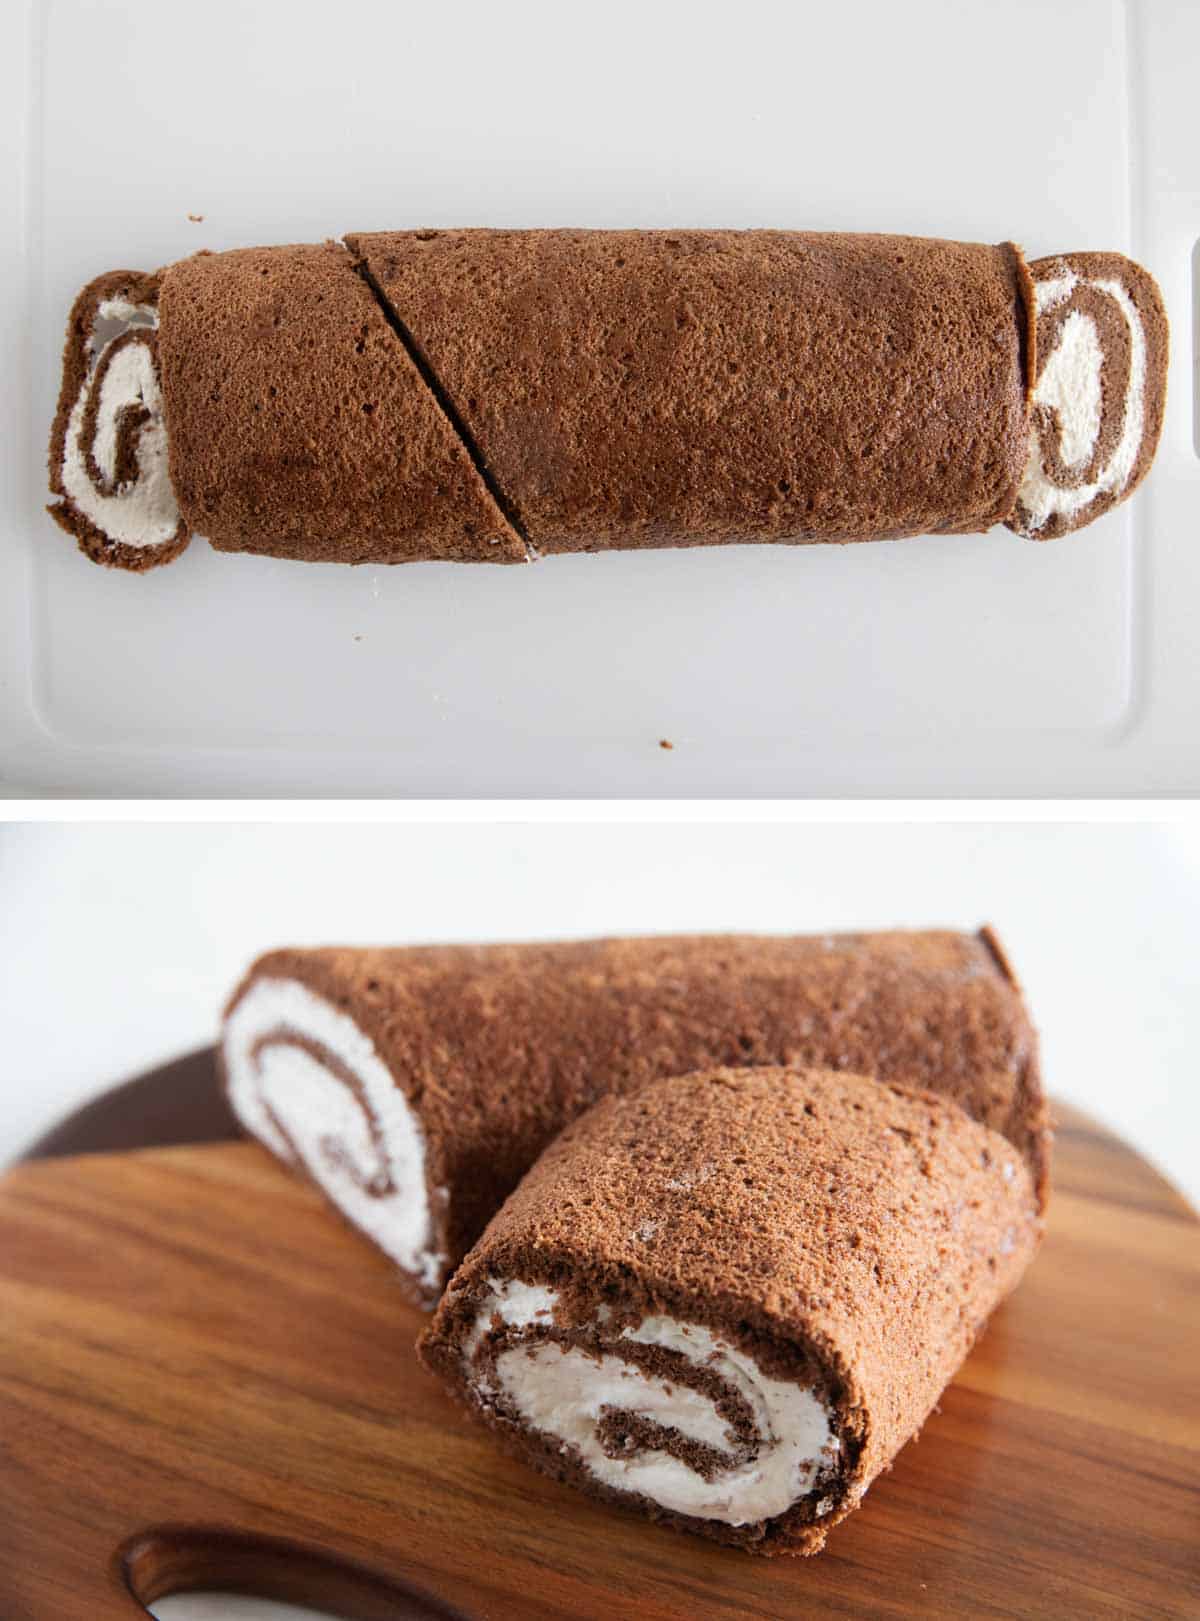 Buche de Noel (Yule Log Cake) - Humbly Homemade